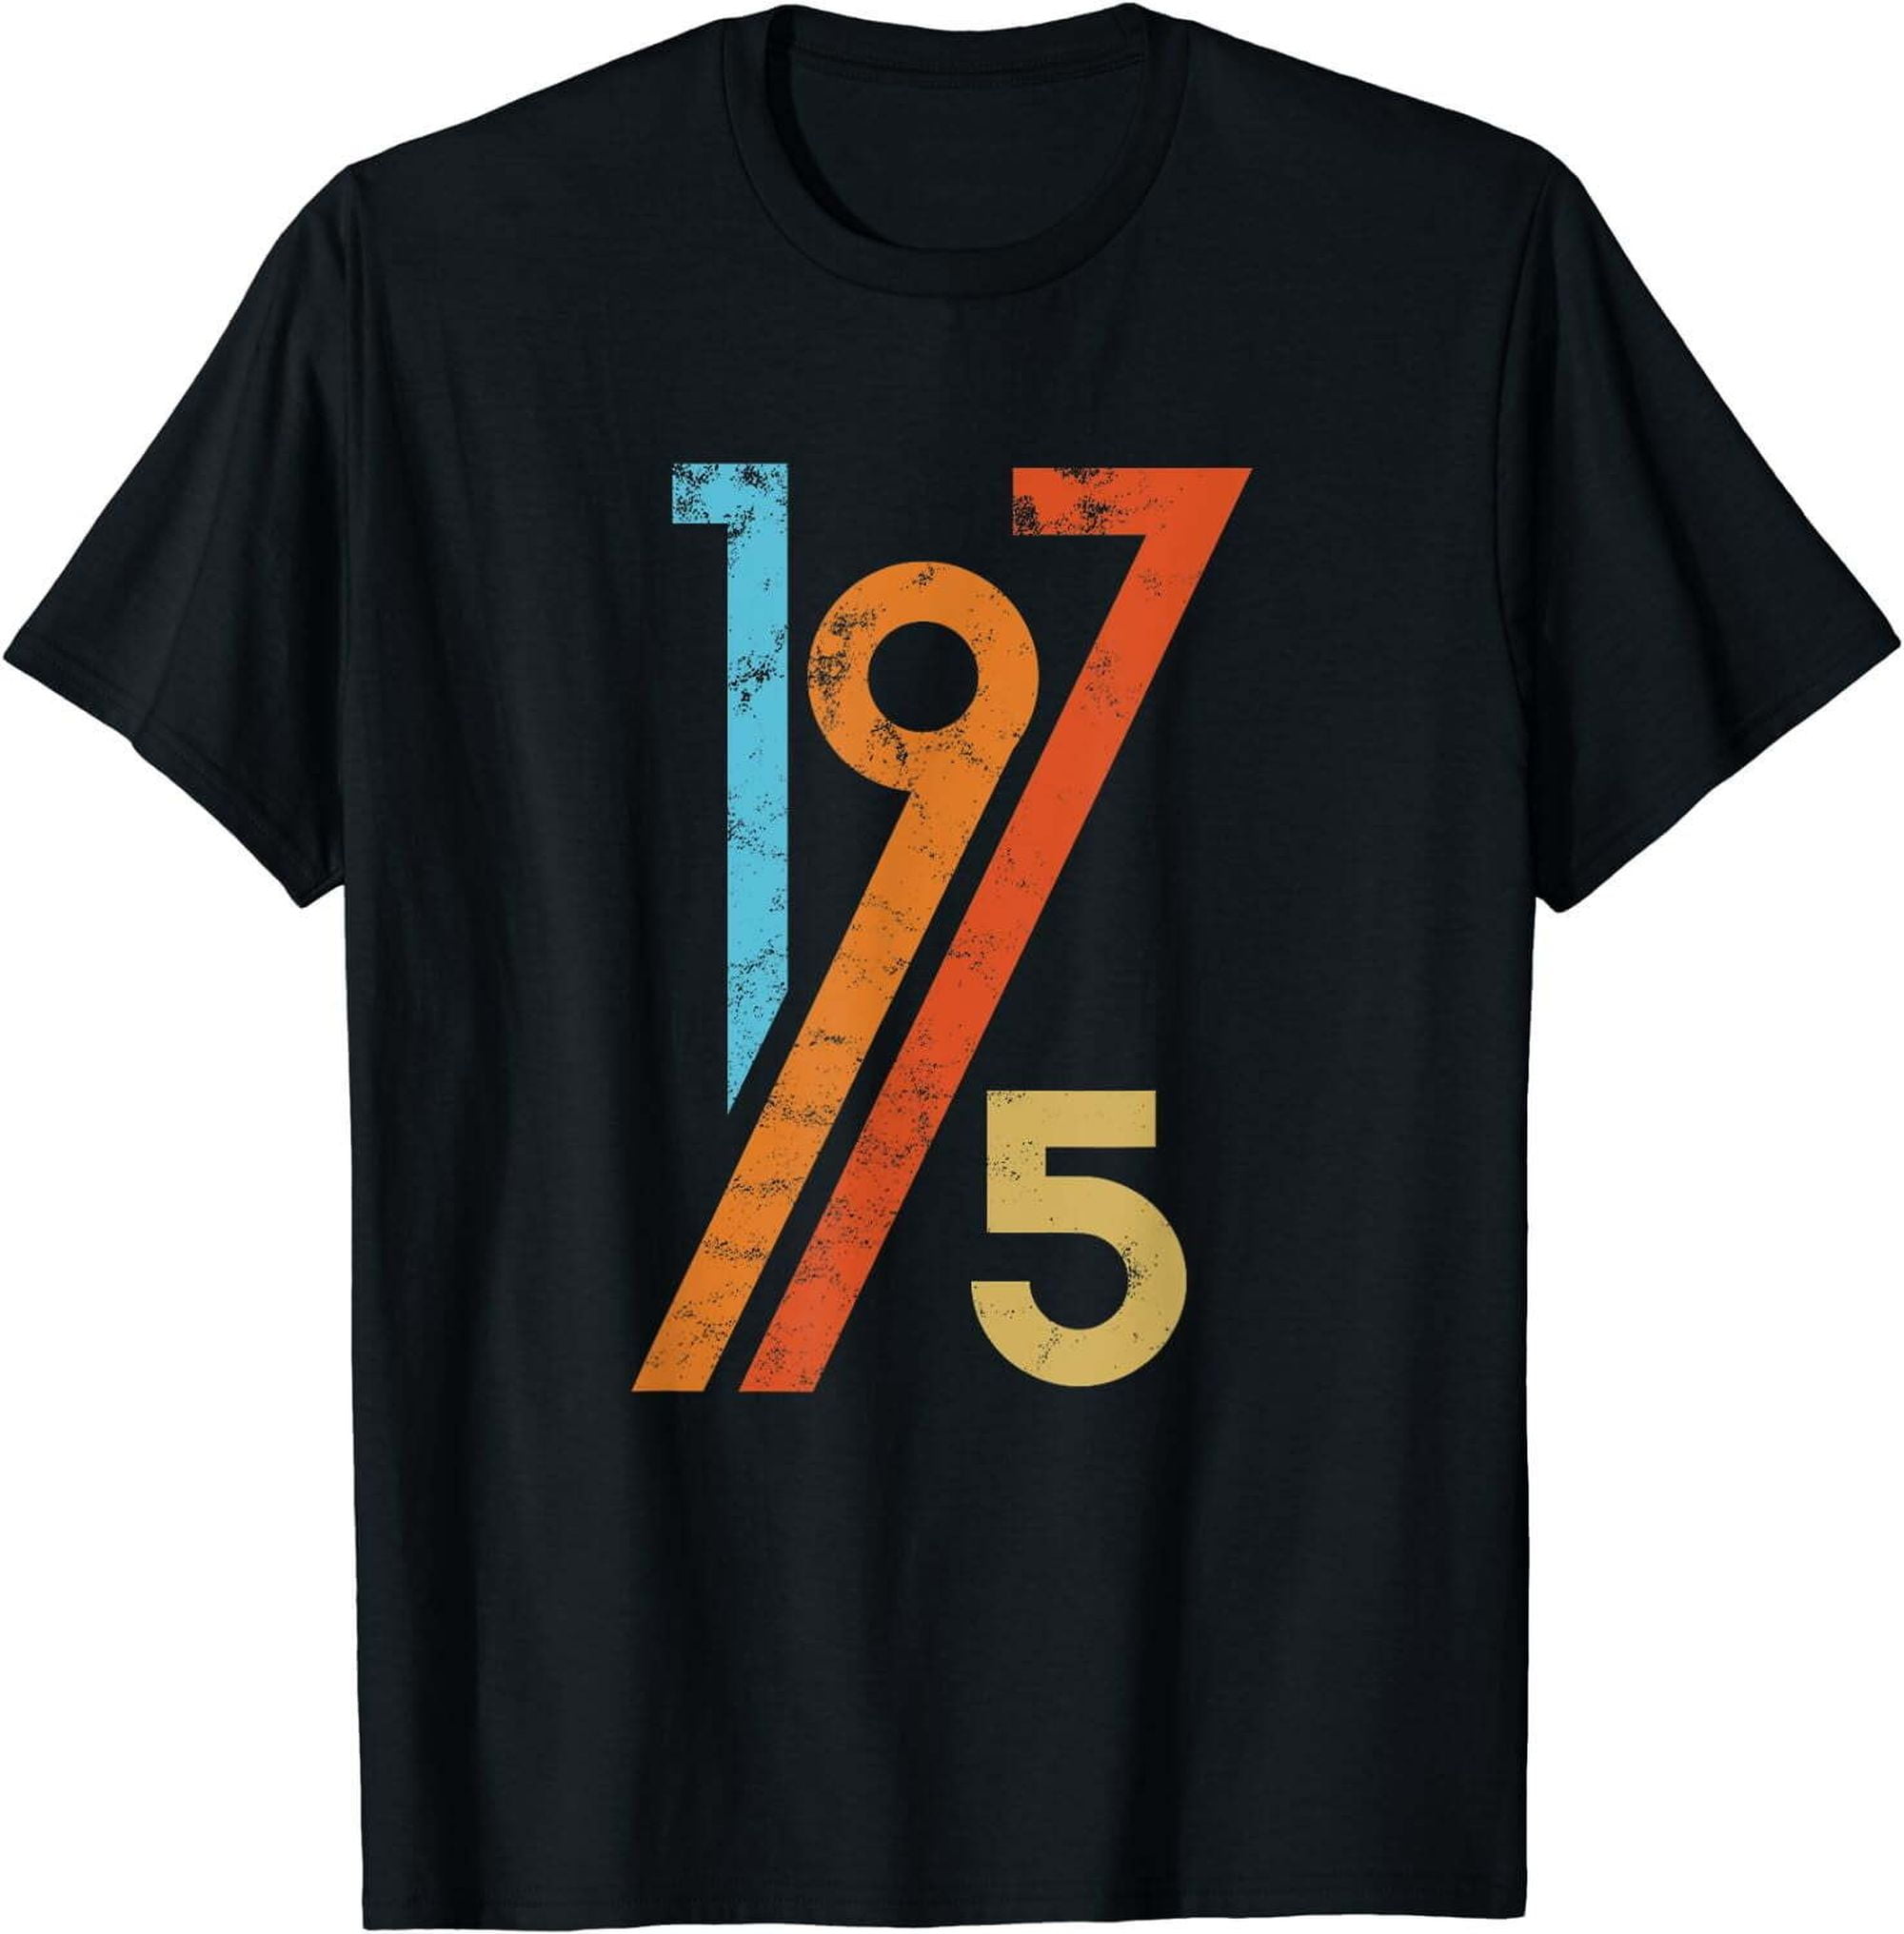 Vintage 70s Birthday Tee - Retro 1975 Shirt in Black XL - Walmart.com